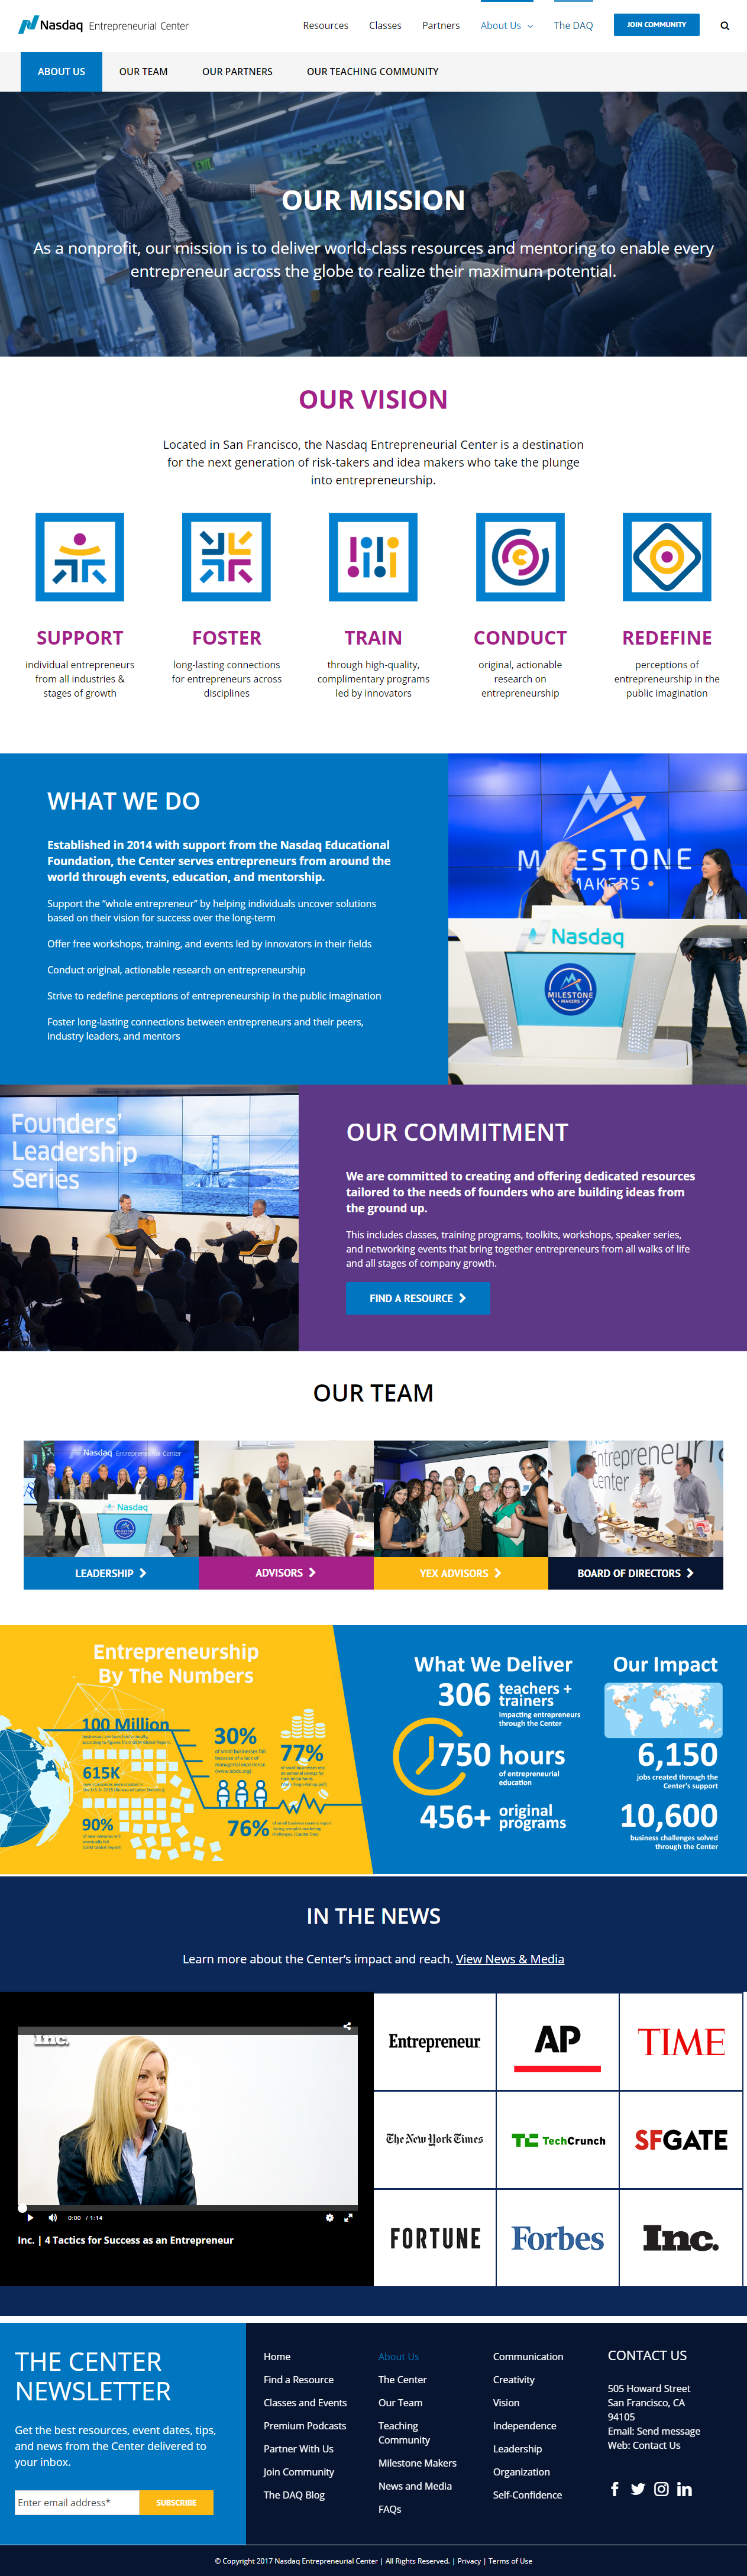 Website Redesign - Nasdaq Entrepreneurial Center - About